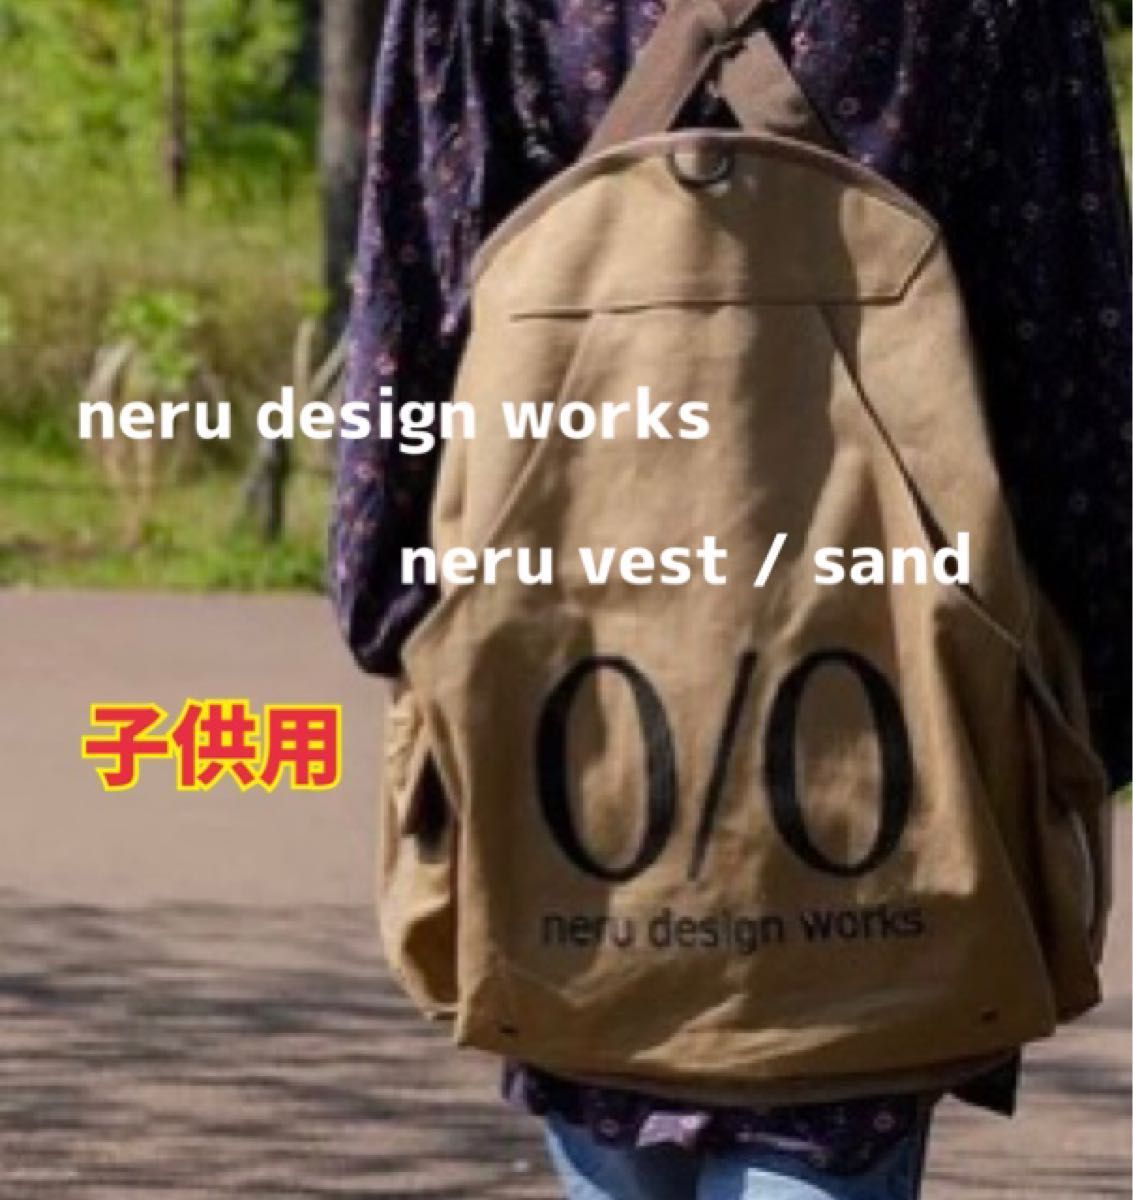 【neru design works】 neru vest 子供用 サンド ネルベスト ネルデザインワークス